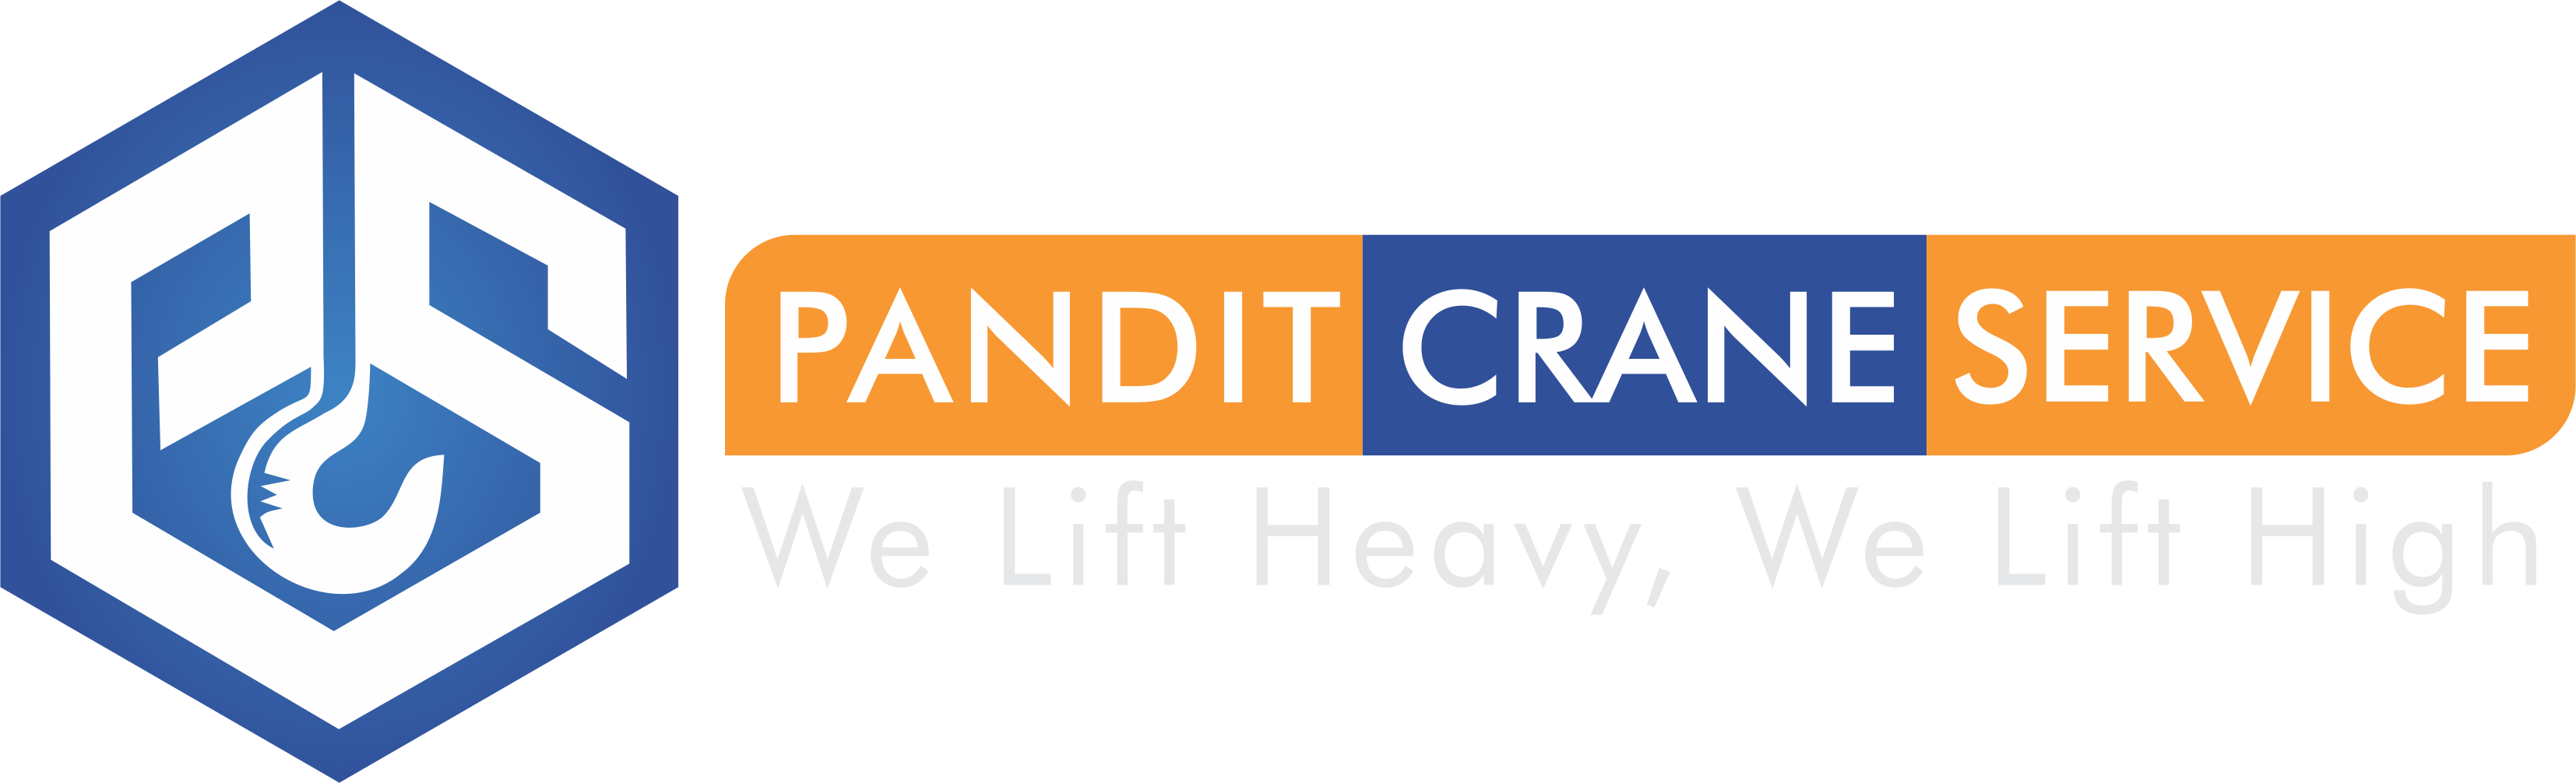 Pandit Crane Service